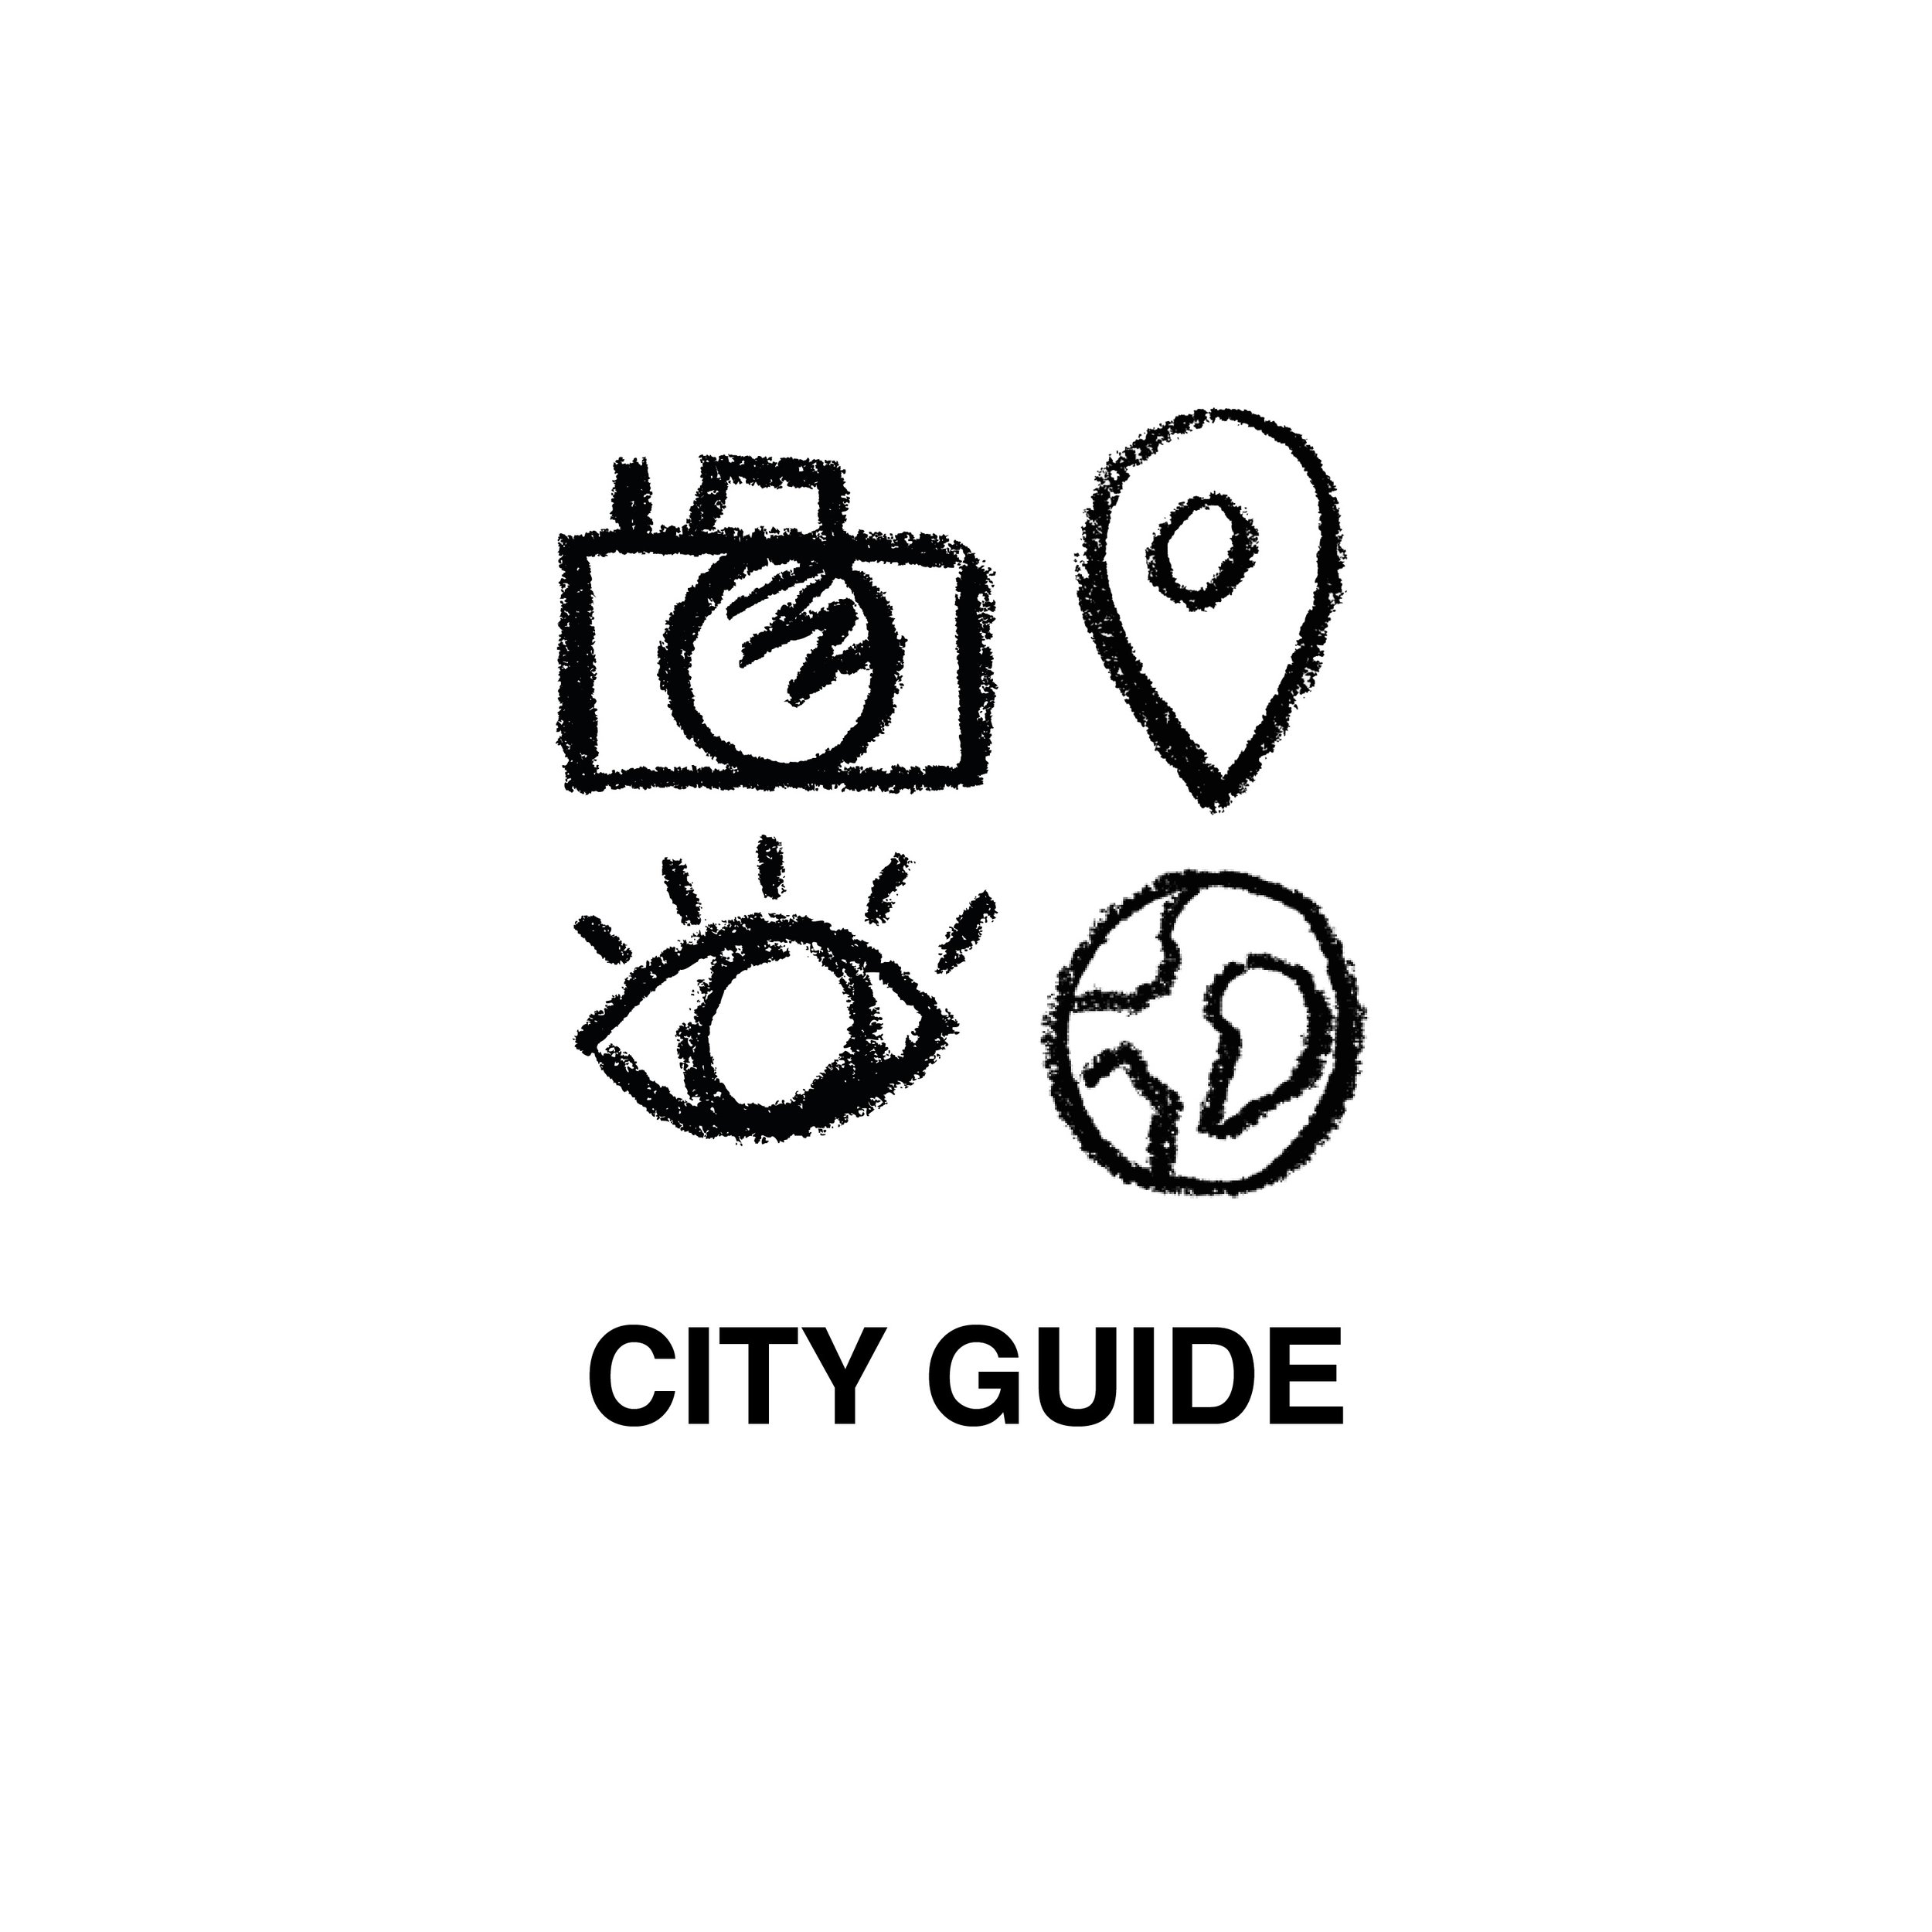 CITY GUIDE_Plan de travail 1.jpg